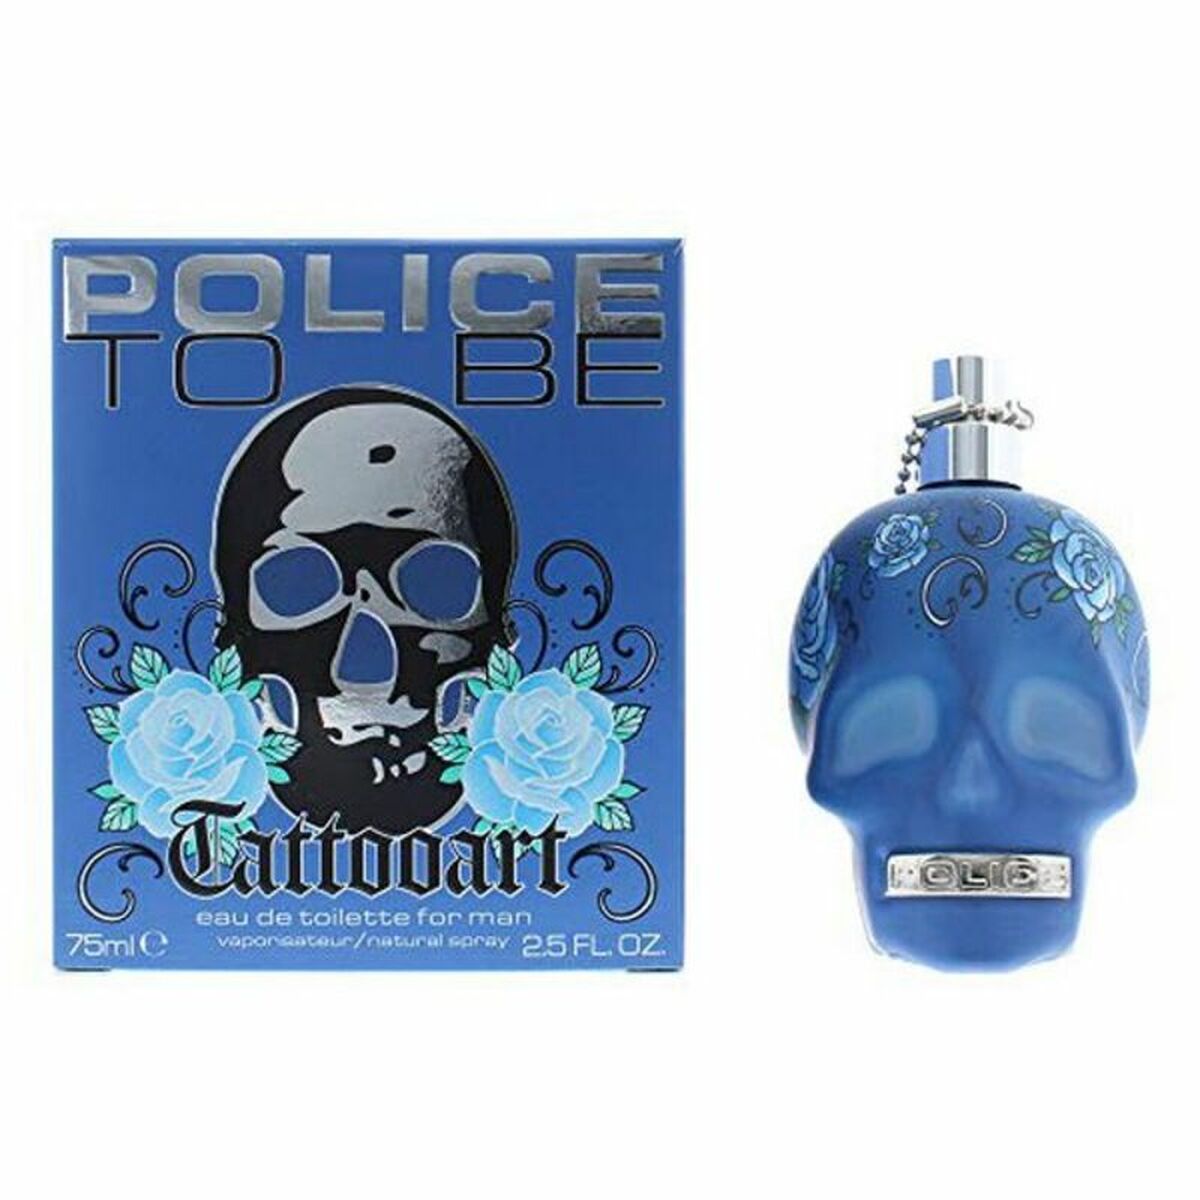 Men's Perfume To Be Tattoo Art Police EDT (75 ml) (75 ml)